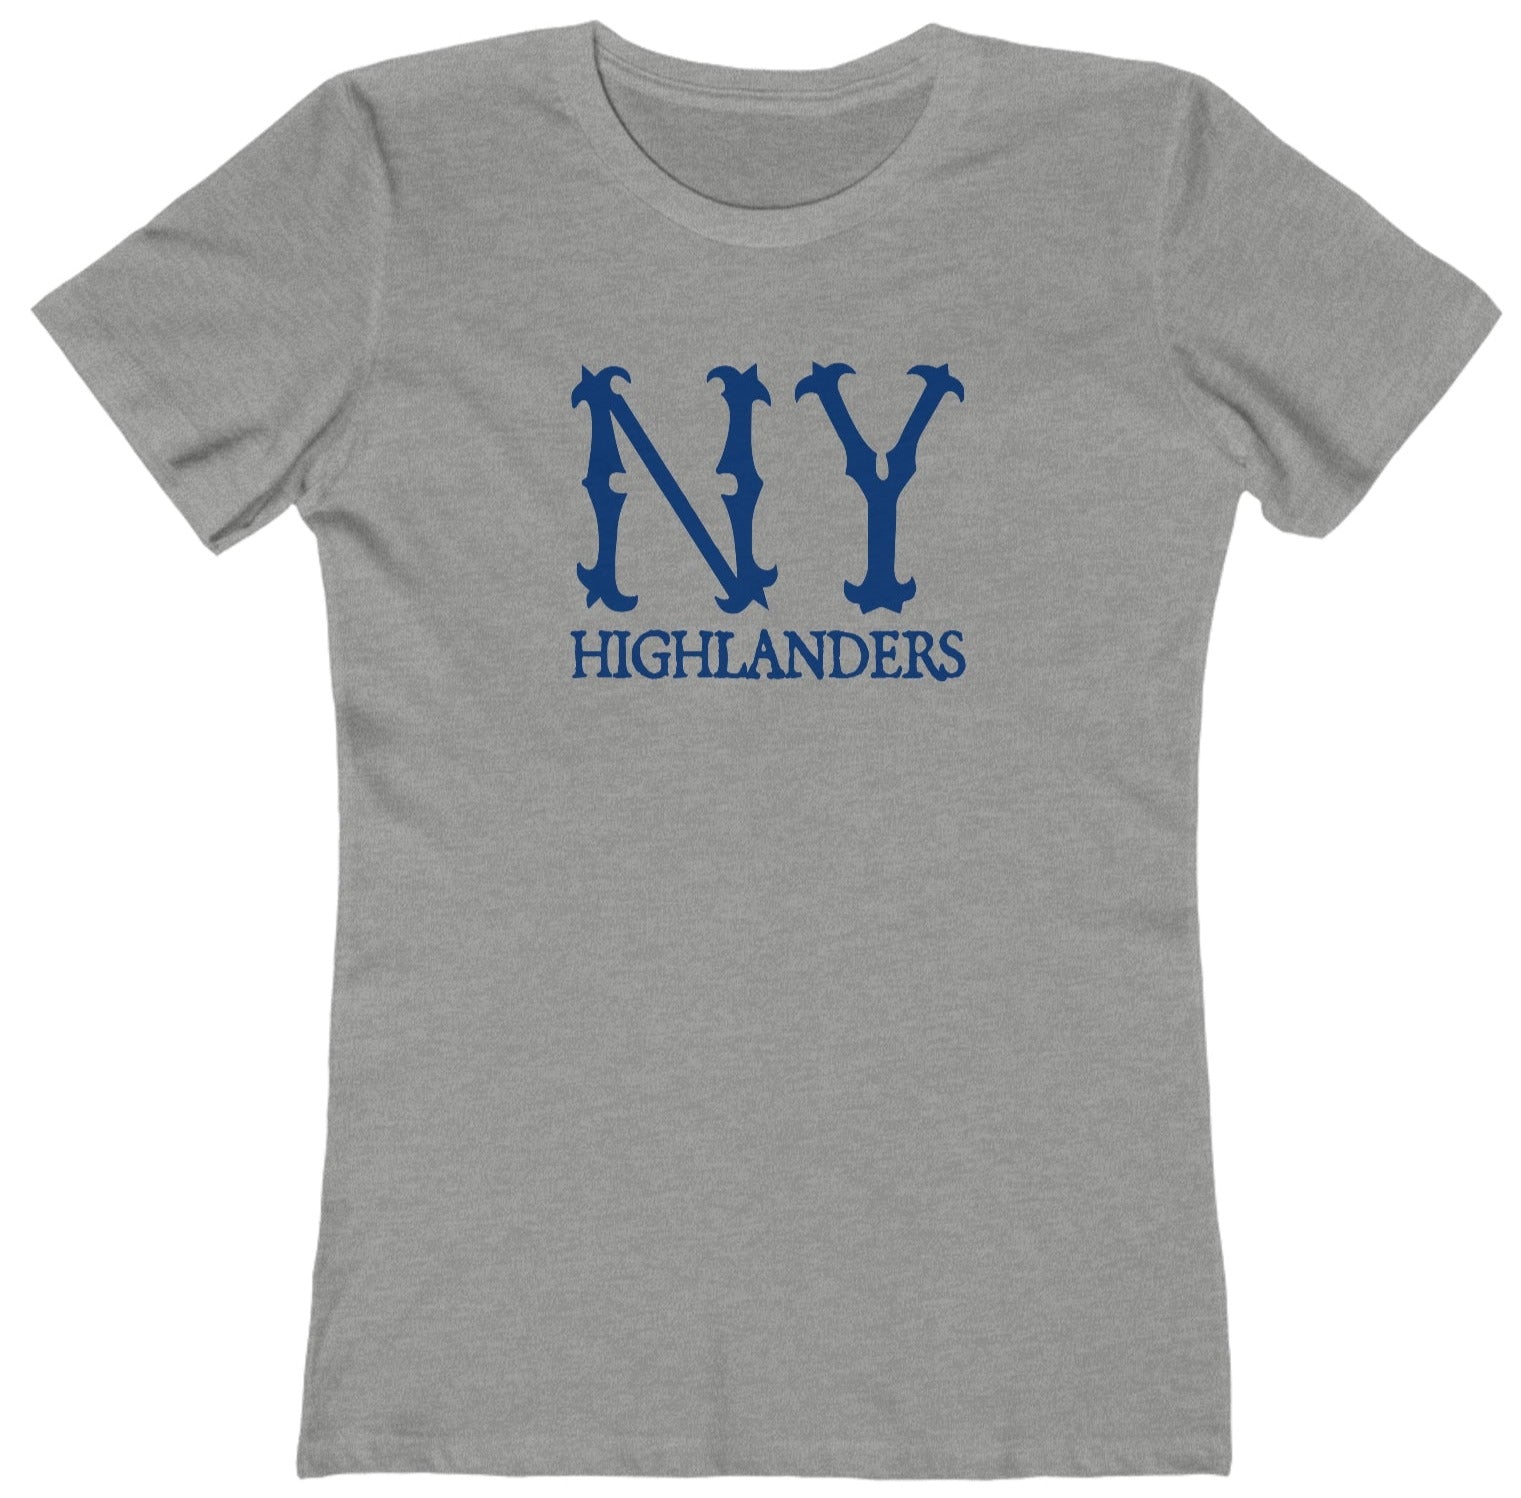 New York Highlanders baseball t-shirt